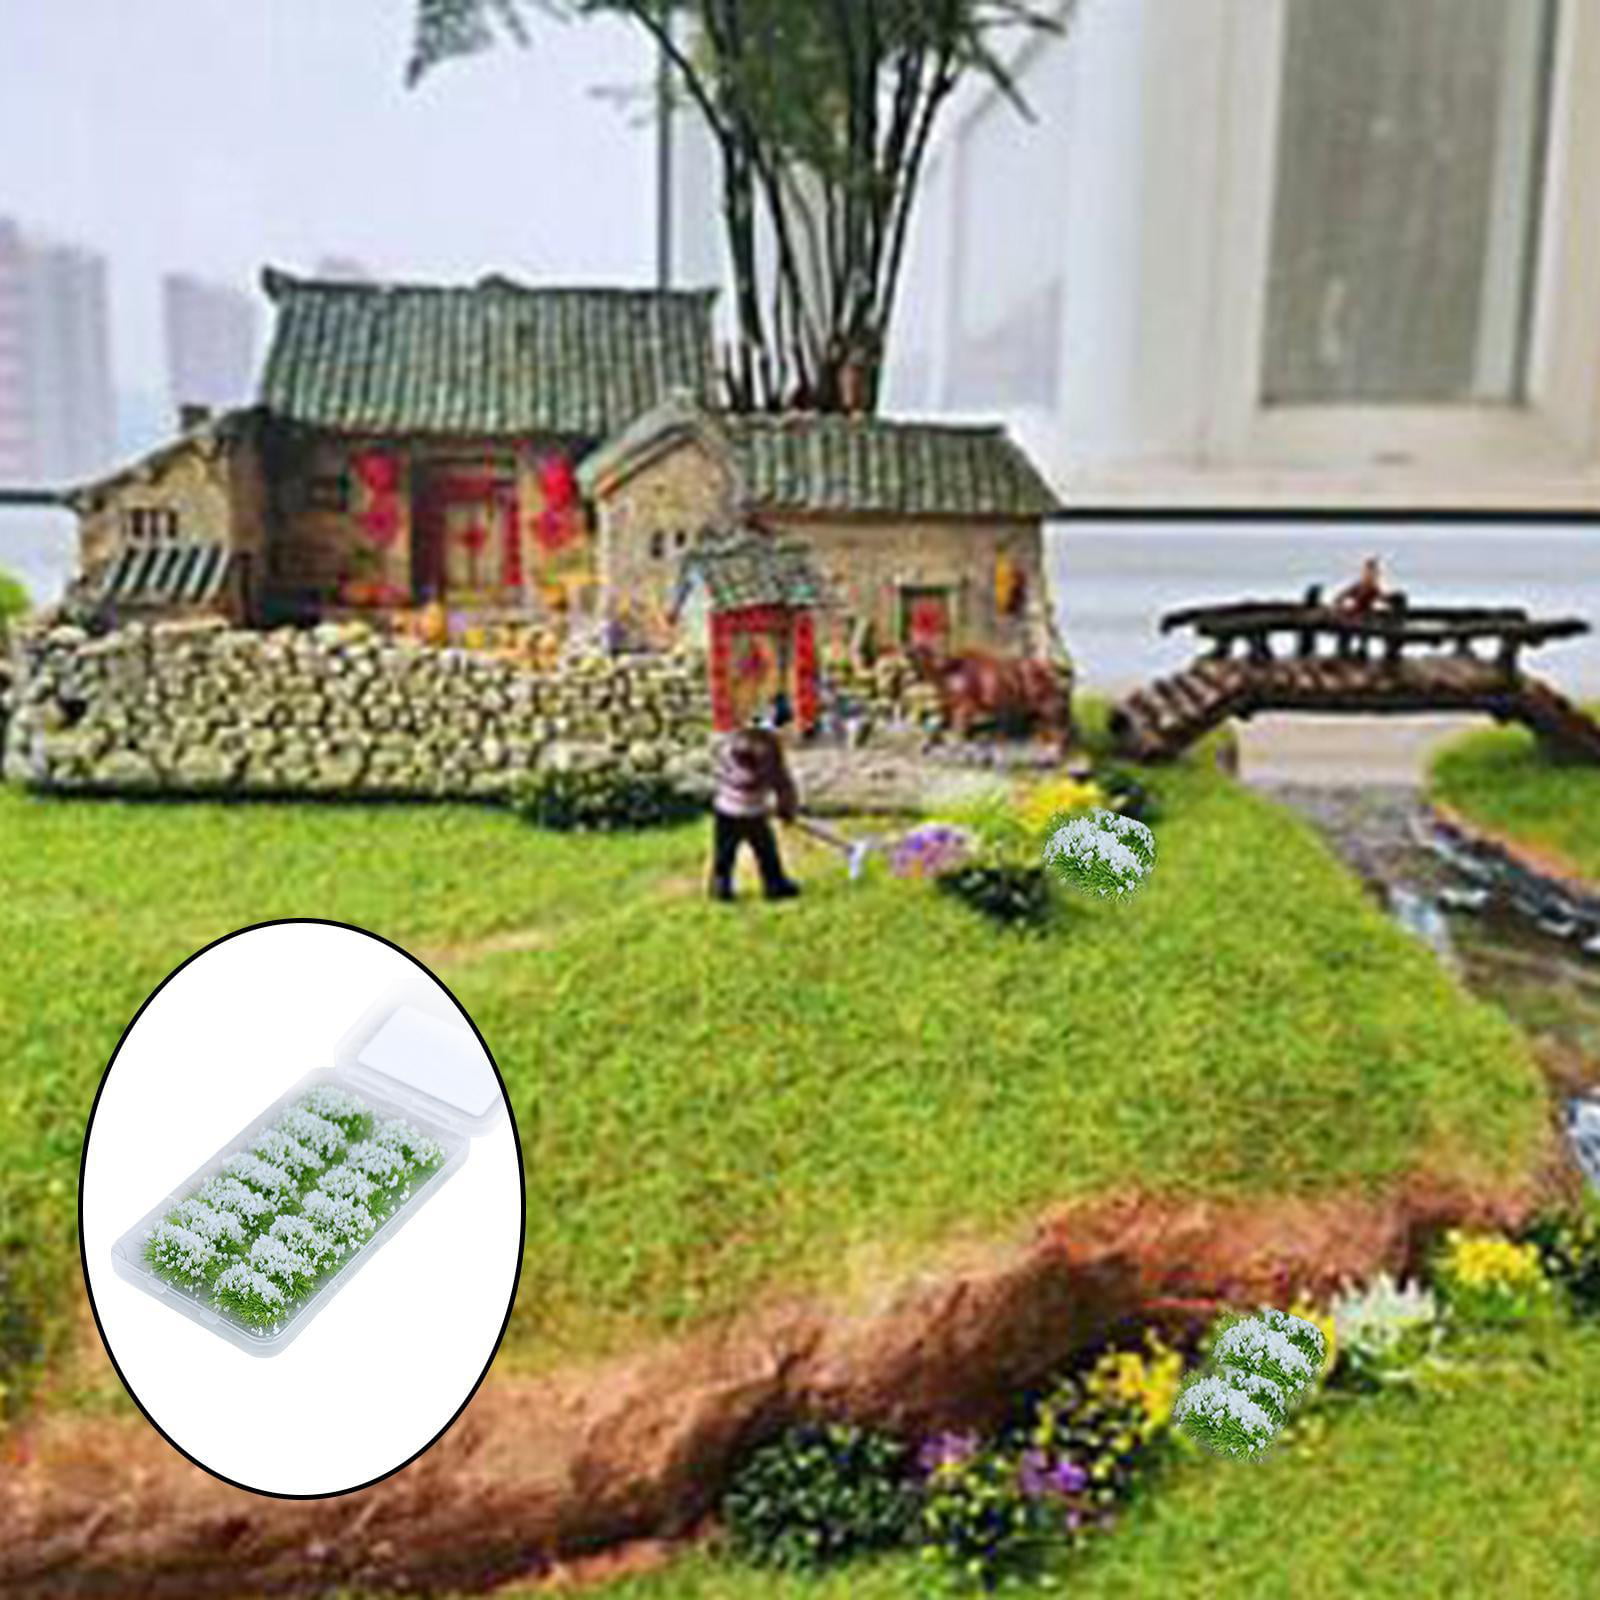 Sufanic Static Grass Model Grass Tufts Railway Artificial Grass Miniature Grass Tuft Terrain Kit for DIY Model Railway Fairy Garden Diorama Scenery